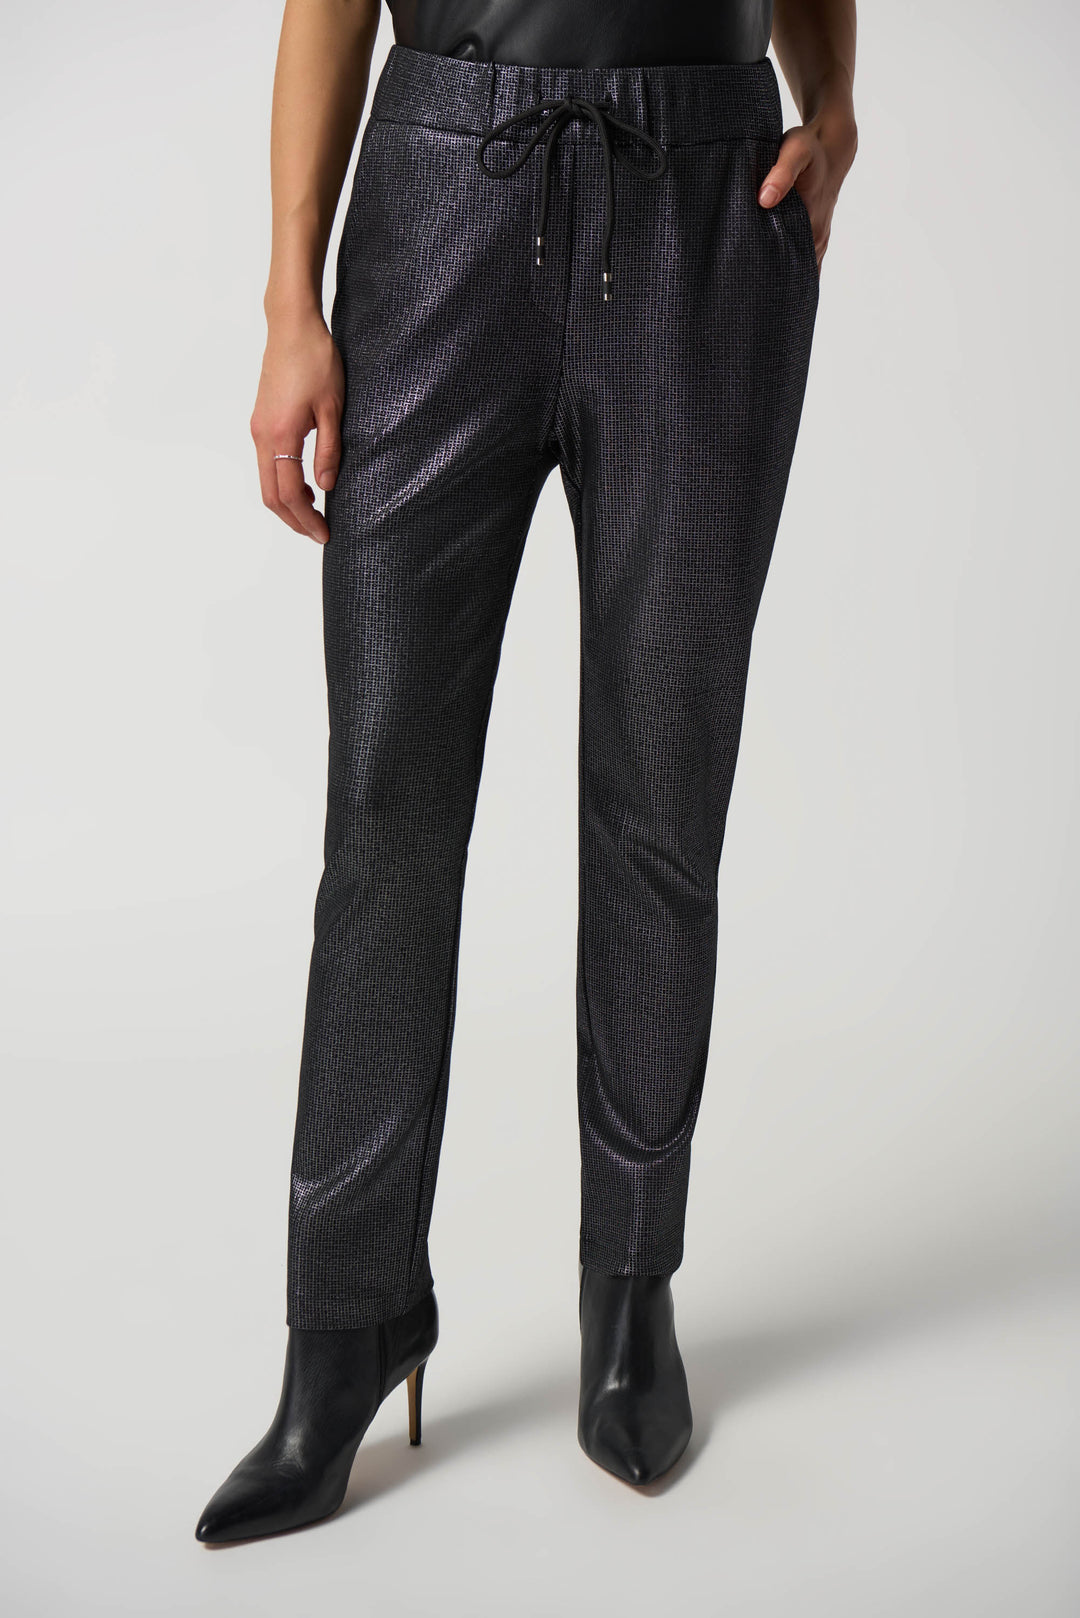 Joseph Ribkoff Fall 2023 women's dressy casual coated black jogger pants - front